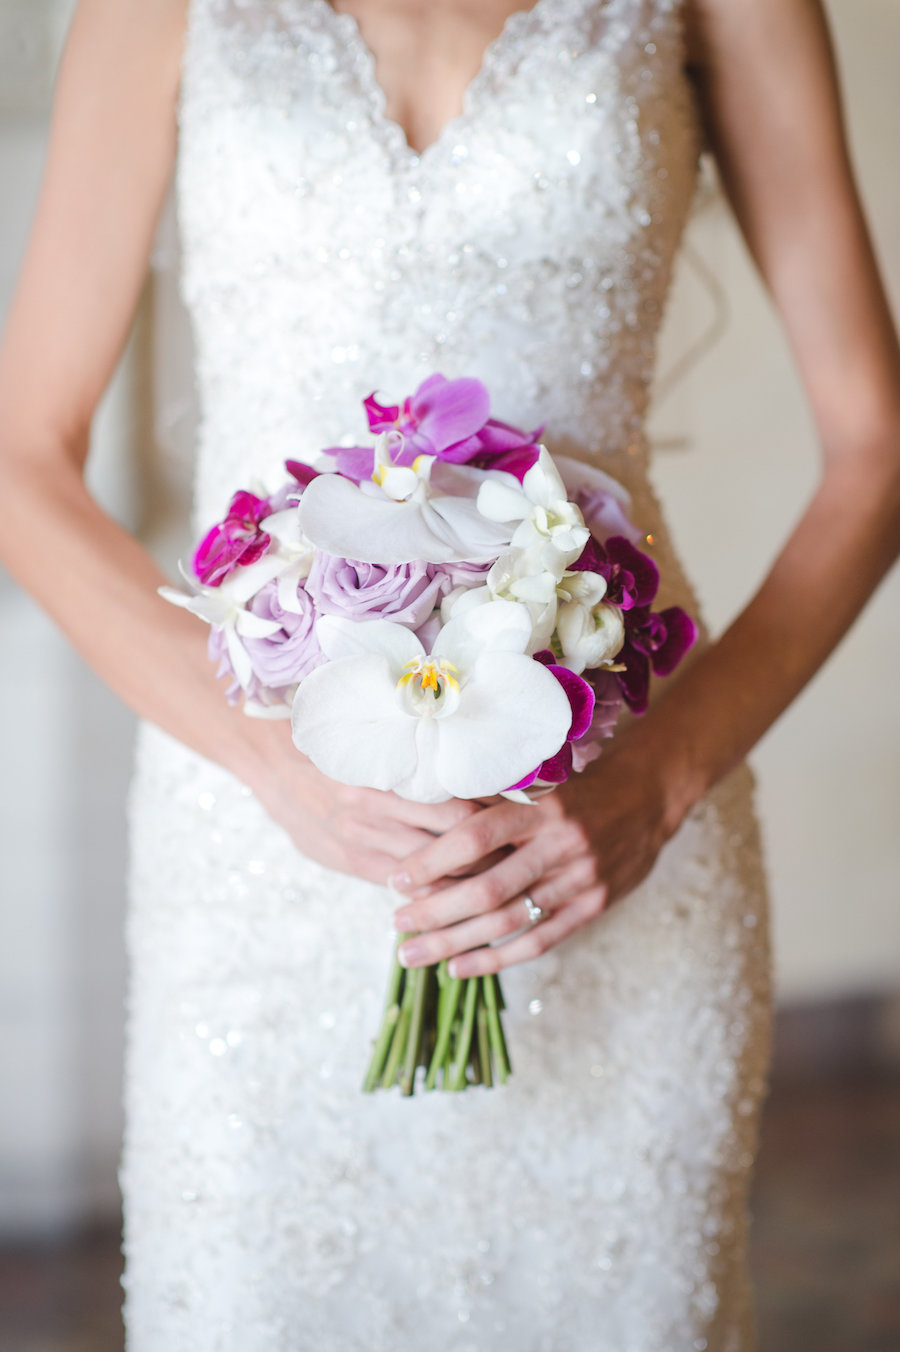 Bridal Wedding Portrait in an Ivory Allure Beaded Sheath Wedding Dress with White and Fuchsia Orchid Wedding Bouquet | Sarasota Wedding Photographer Marc Edwards Photographs